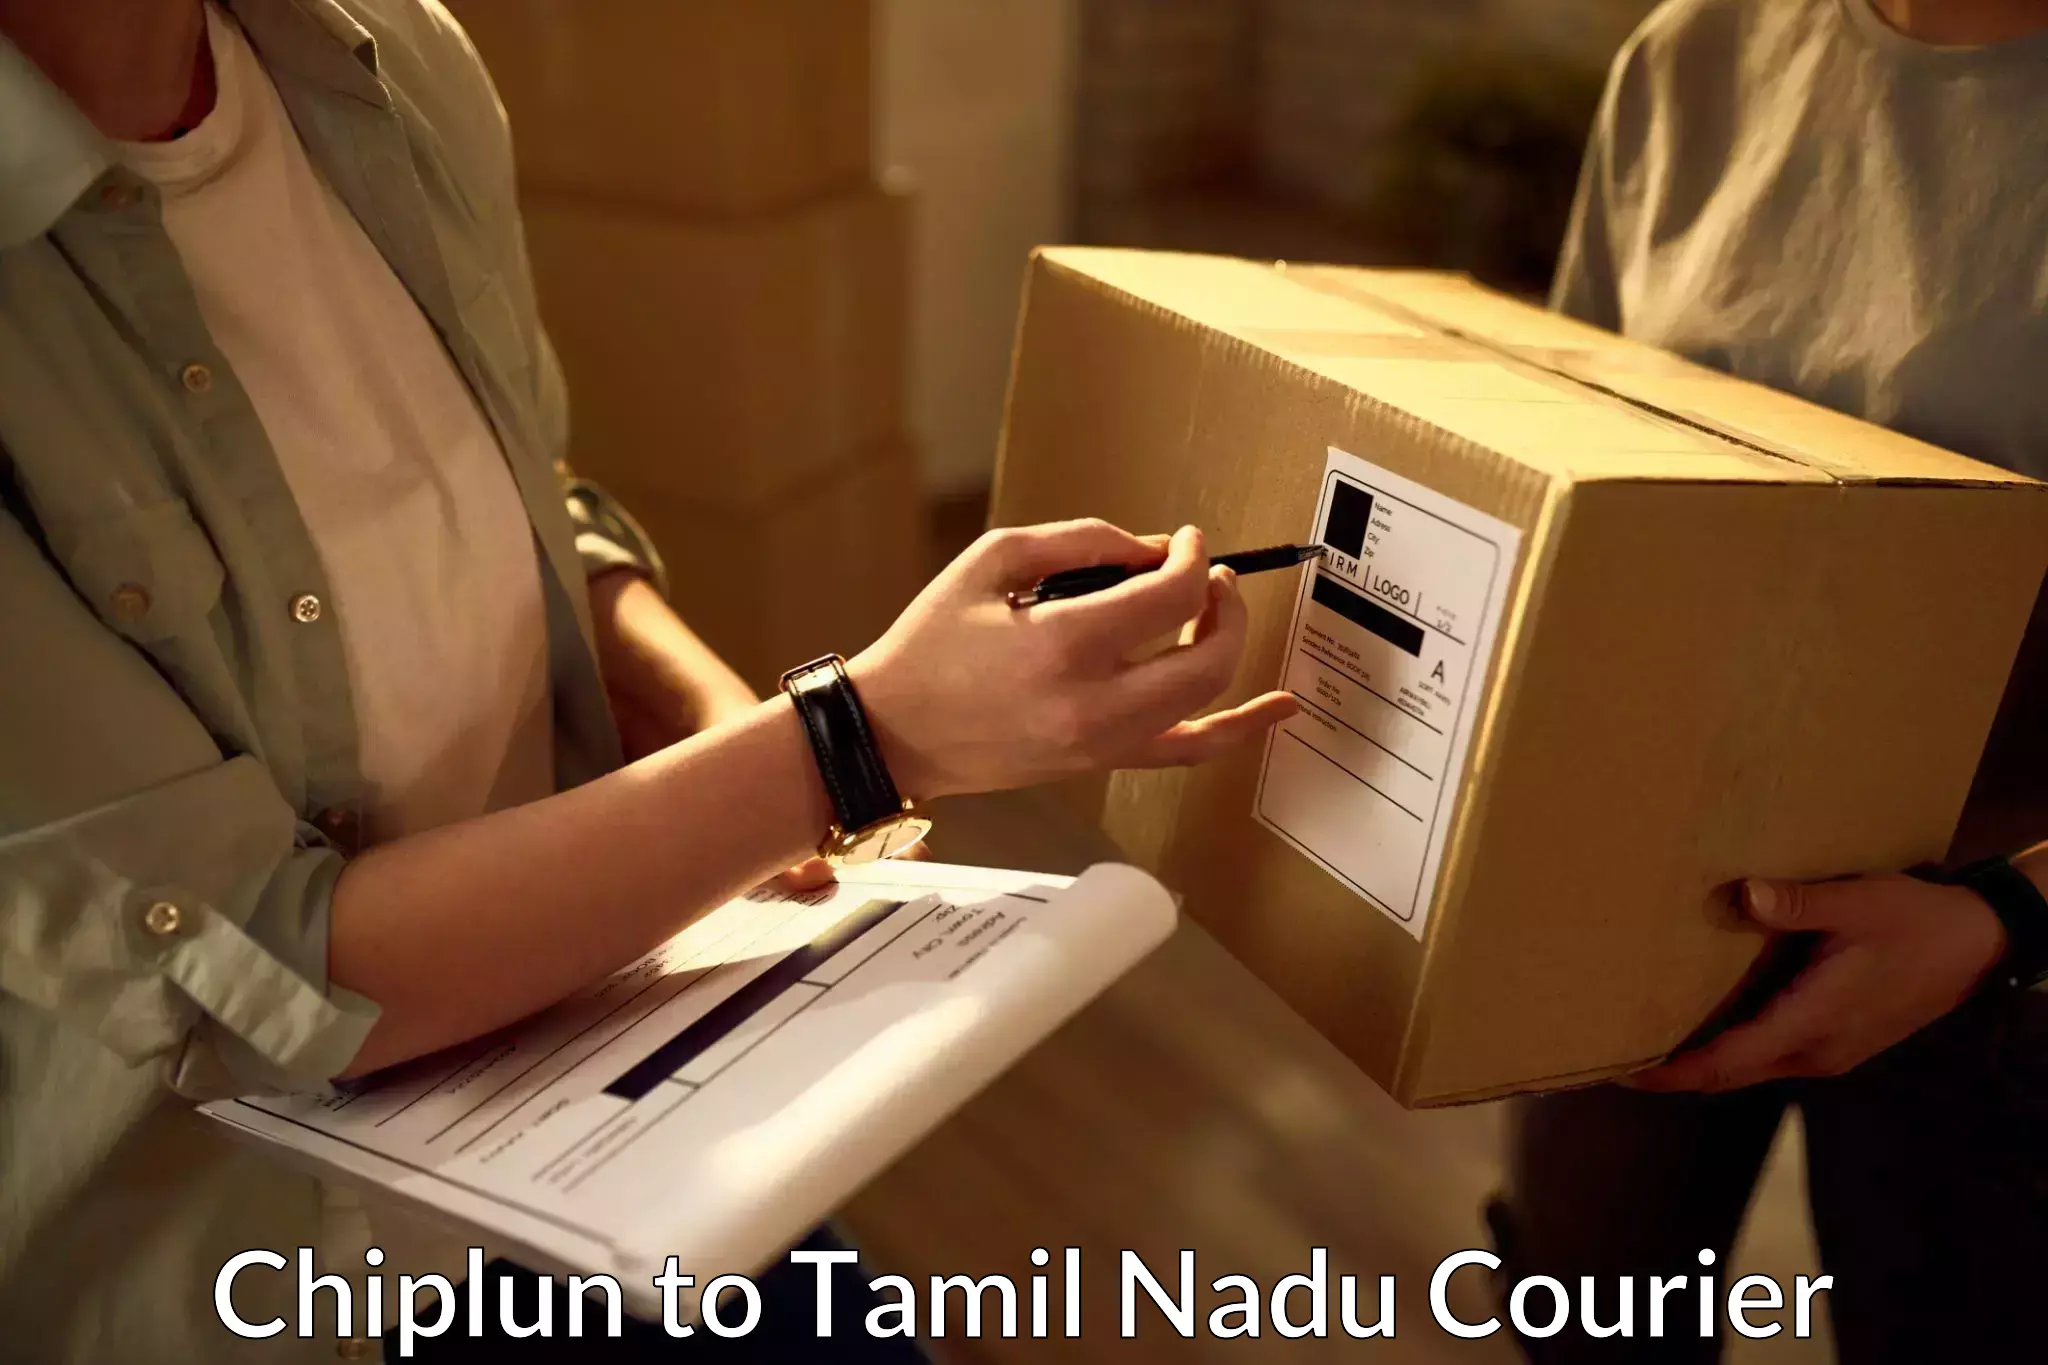 Bulk courier orders Chiplun to Tamil Nadu